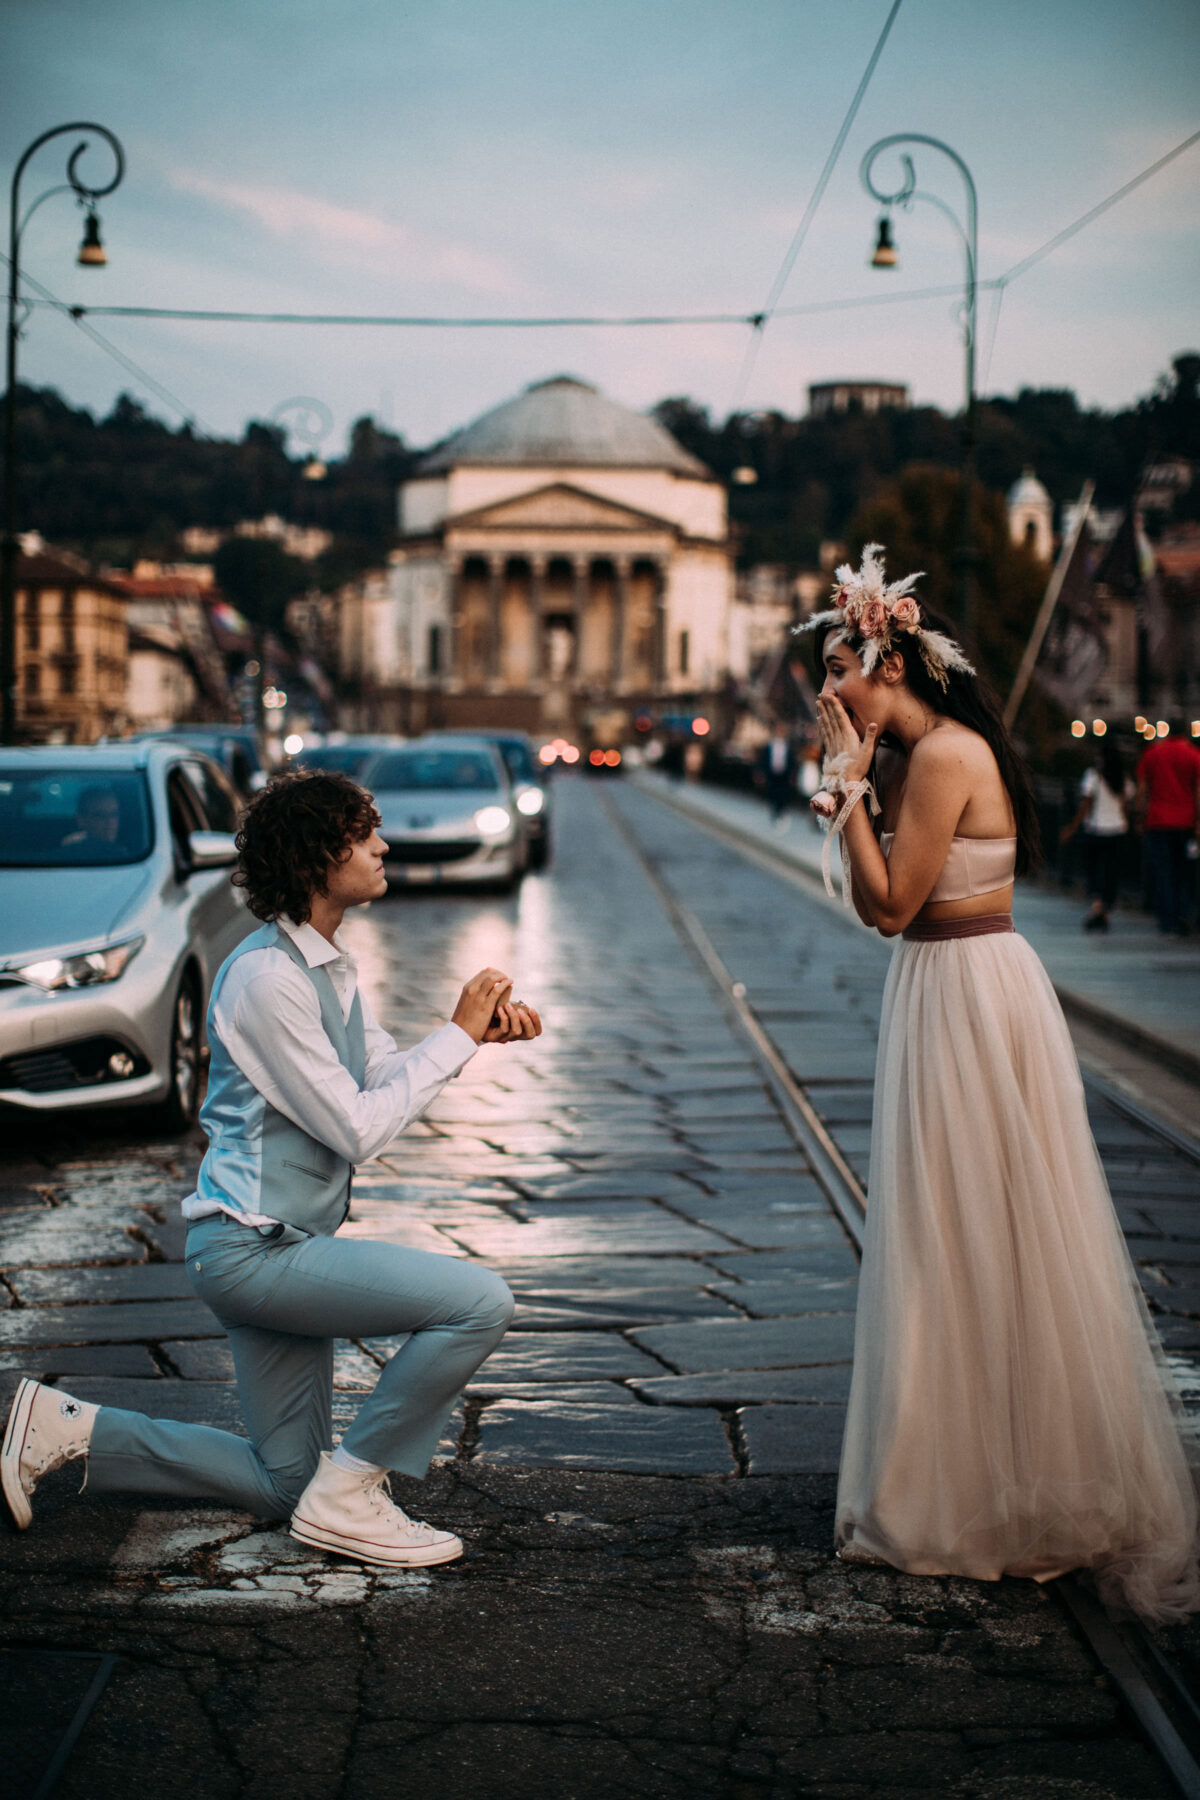 Wedding Proposal Ideas - Photo: Giada Joey Cazzola